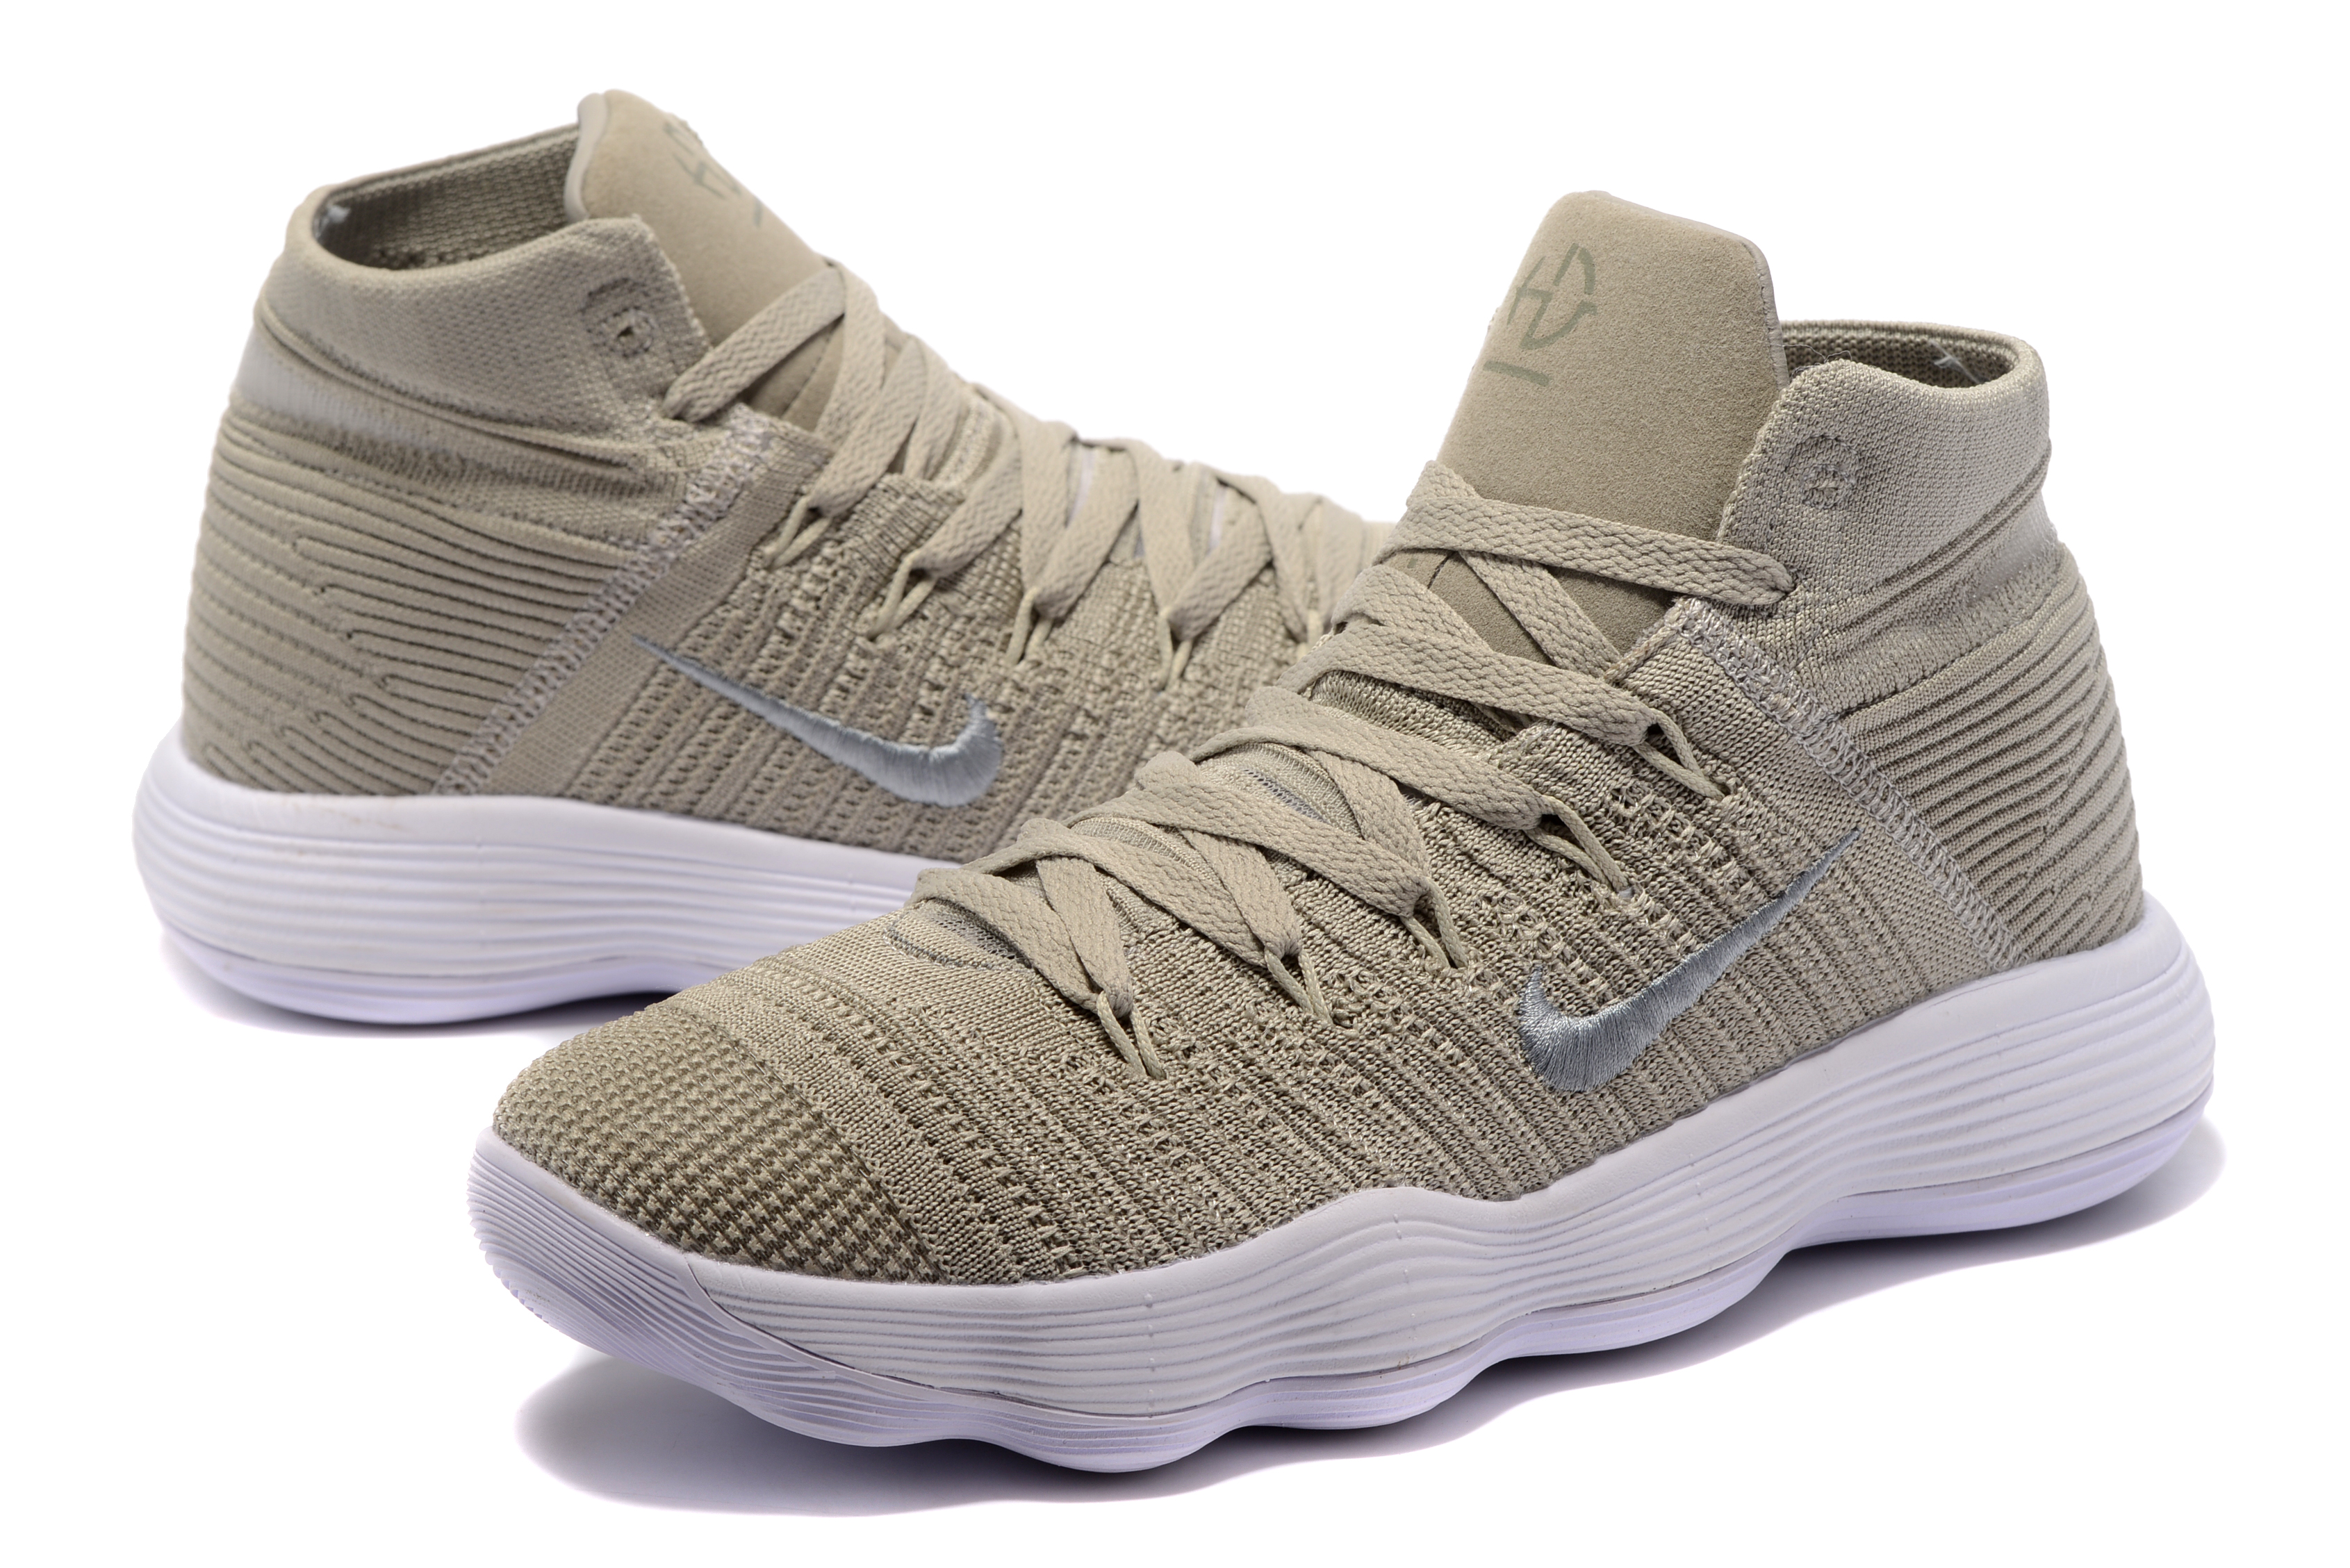 New Nike Hyperdunk 2017 Khaki Basketball Shoes